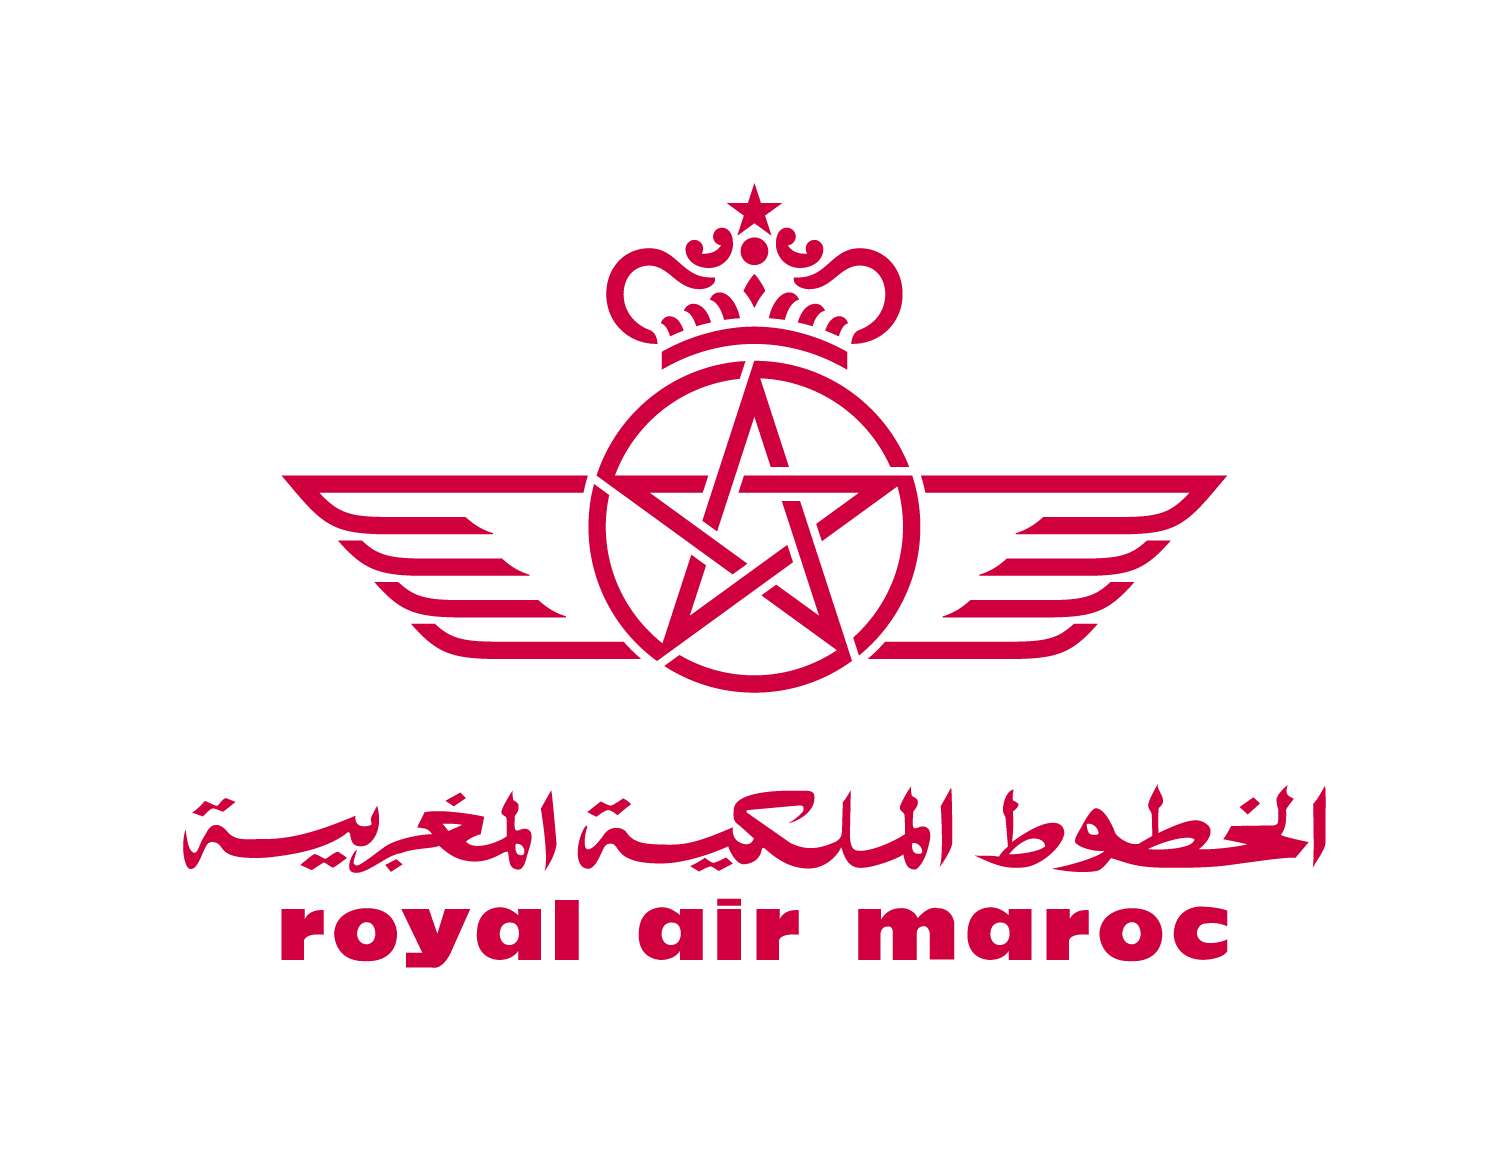 Royal Air Maroc logo.